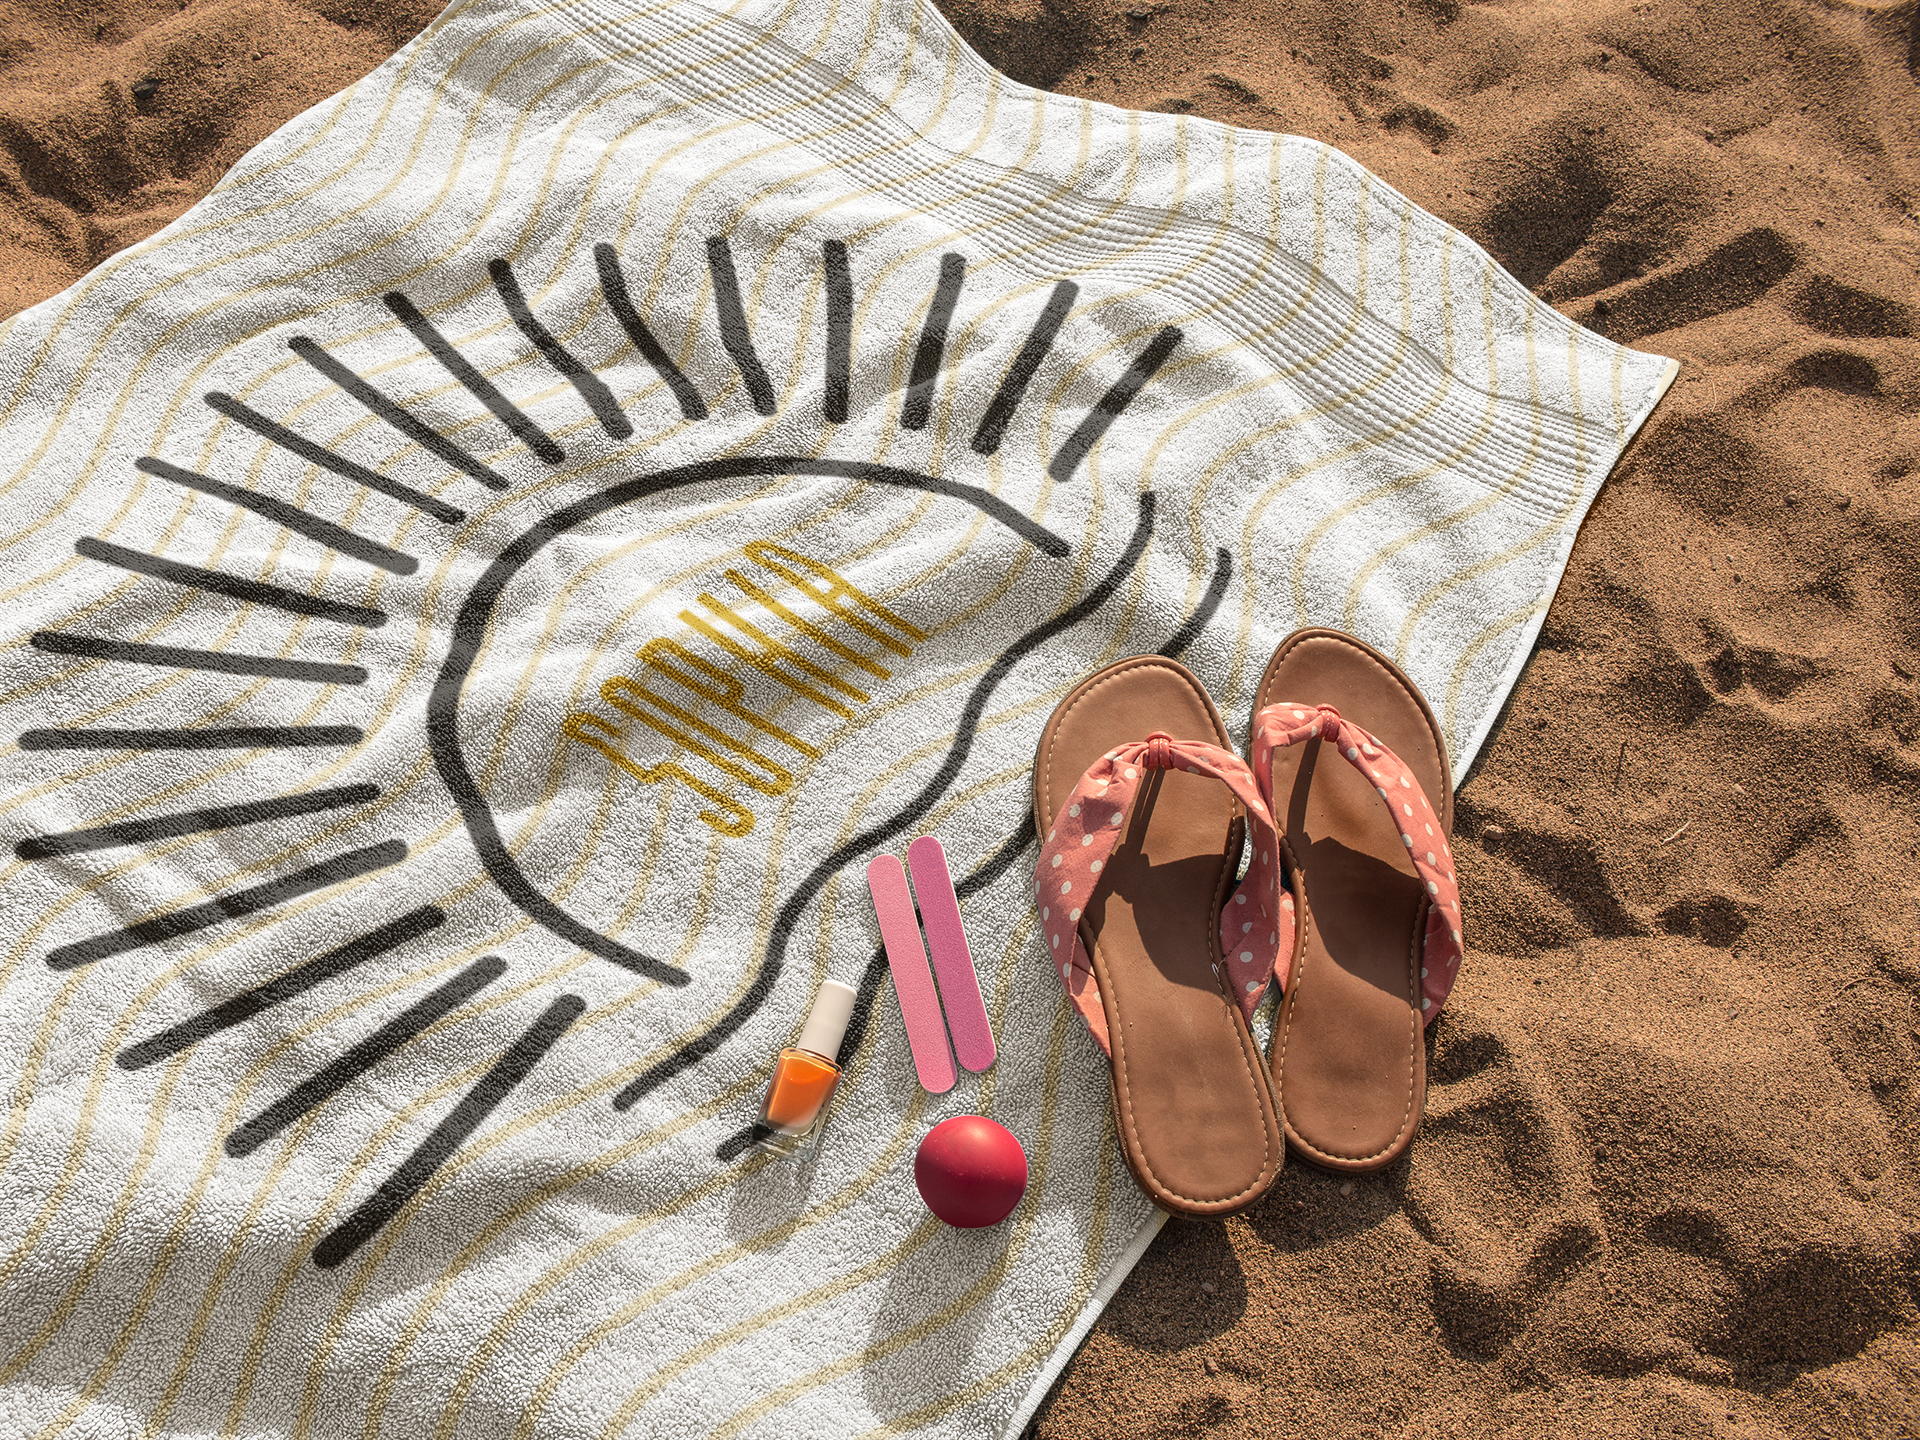 The Customized "Sun's Up" Beach Towel - A Summer Necessity!